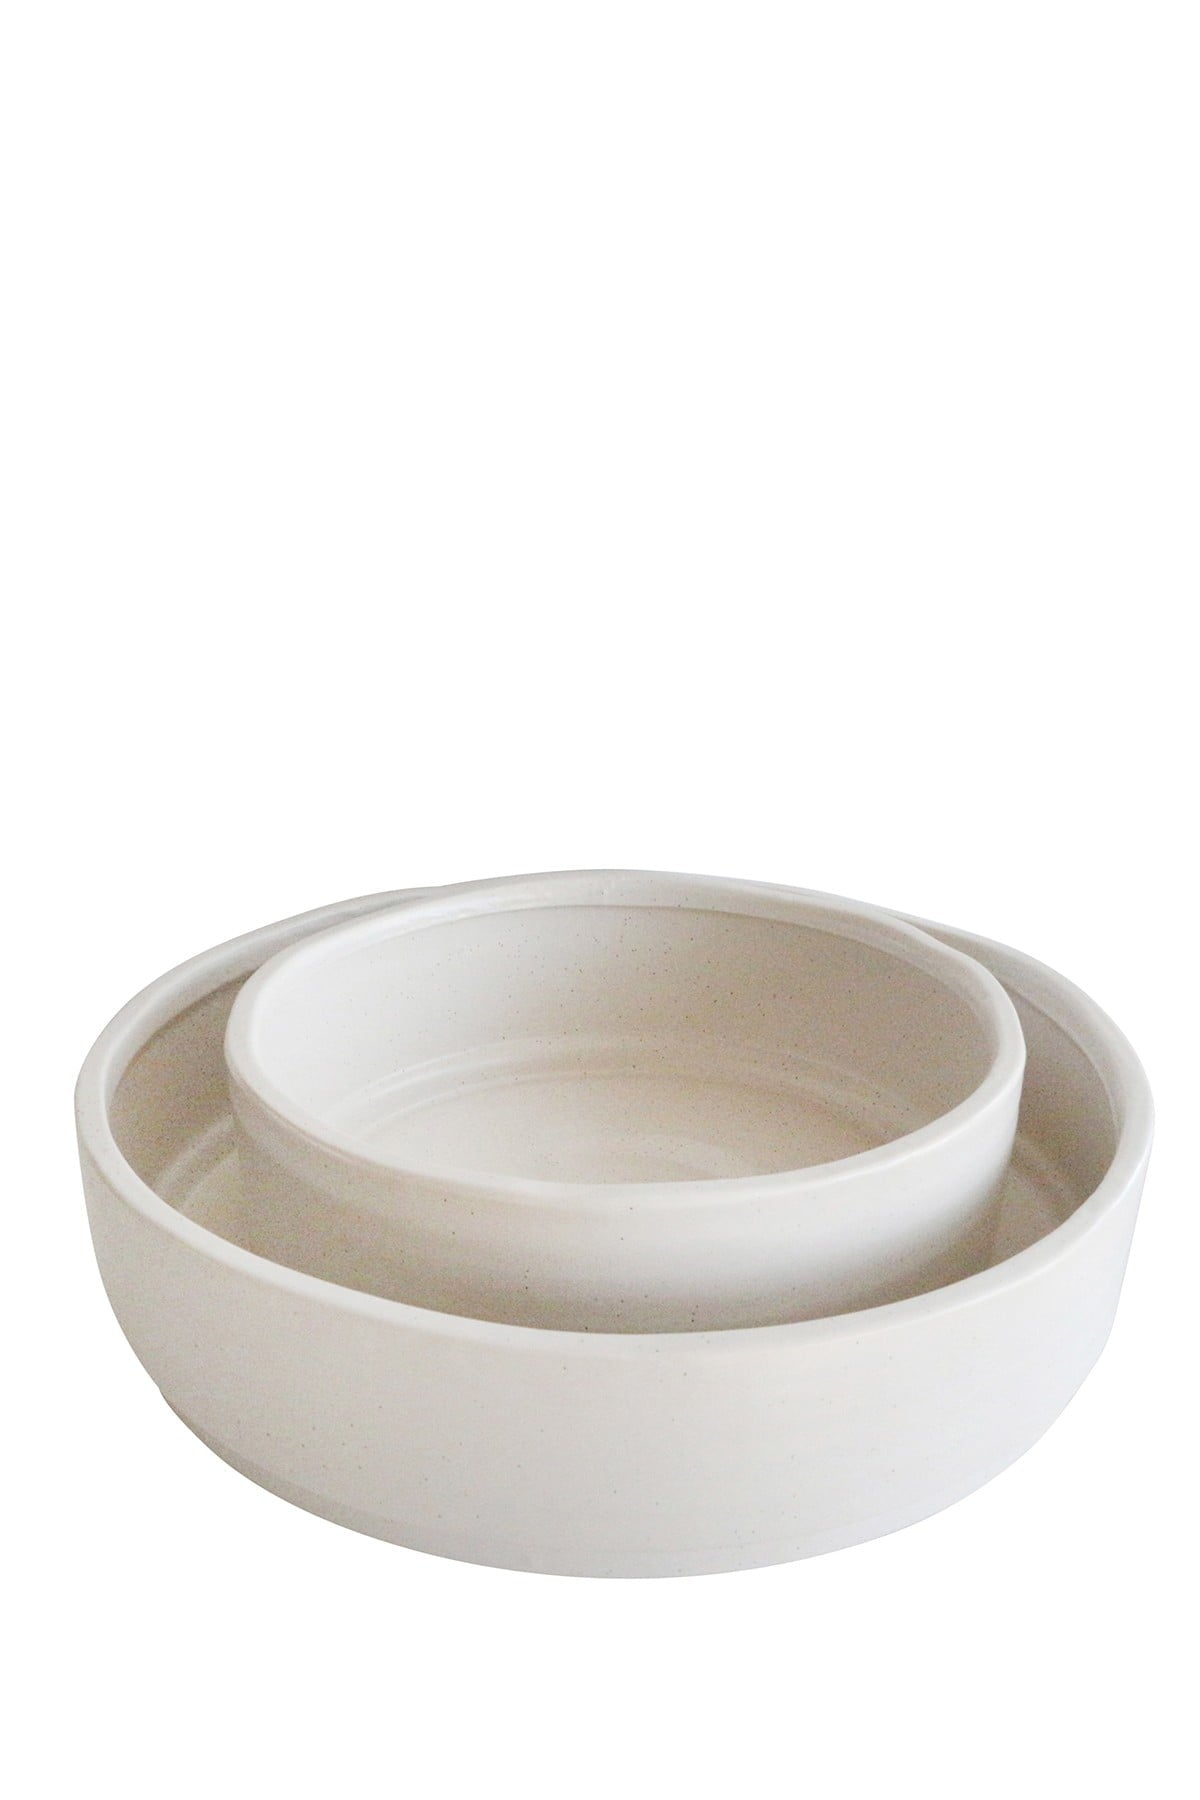 Matte White Ceramic Planter Bowl